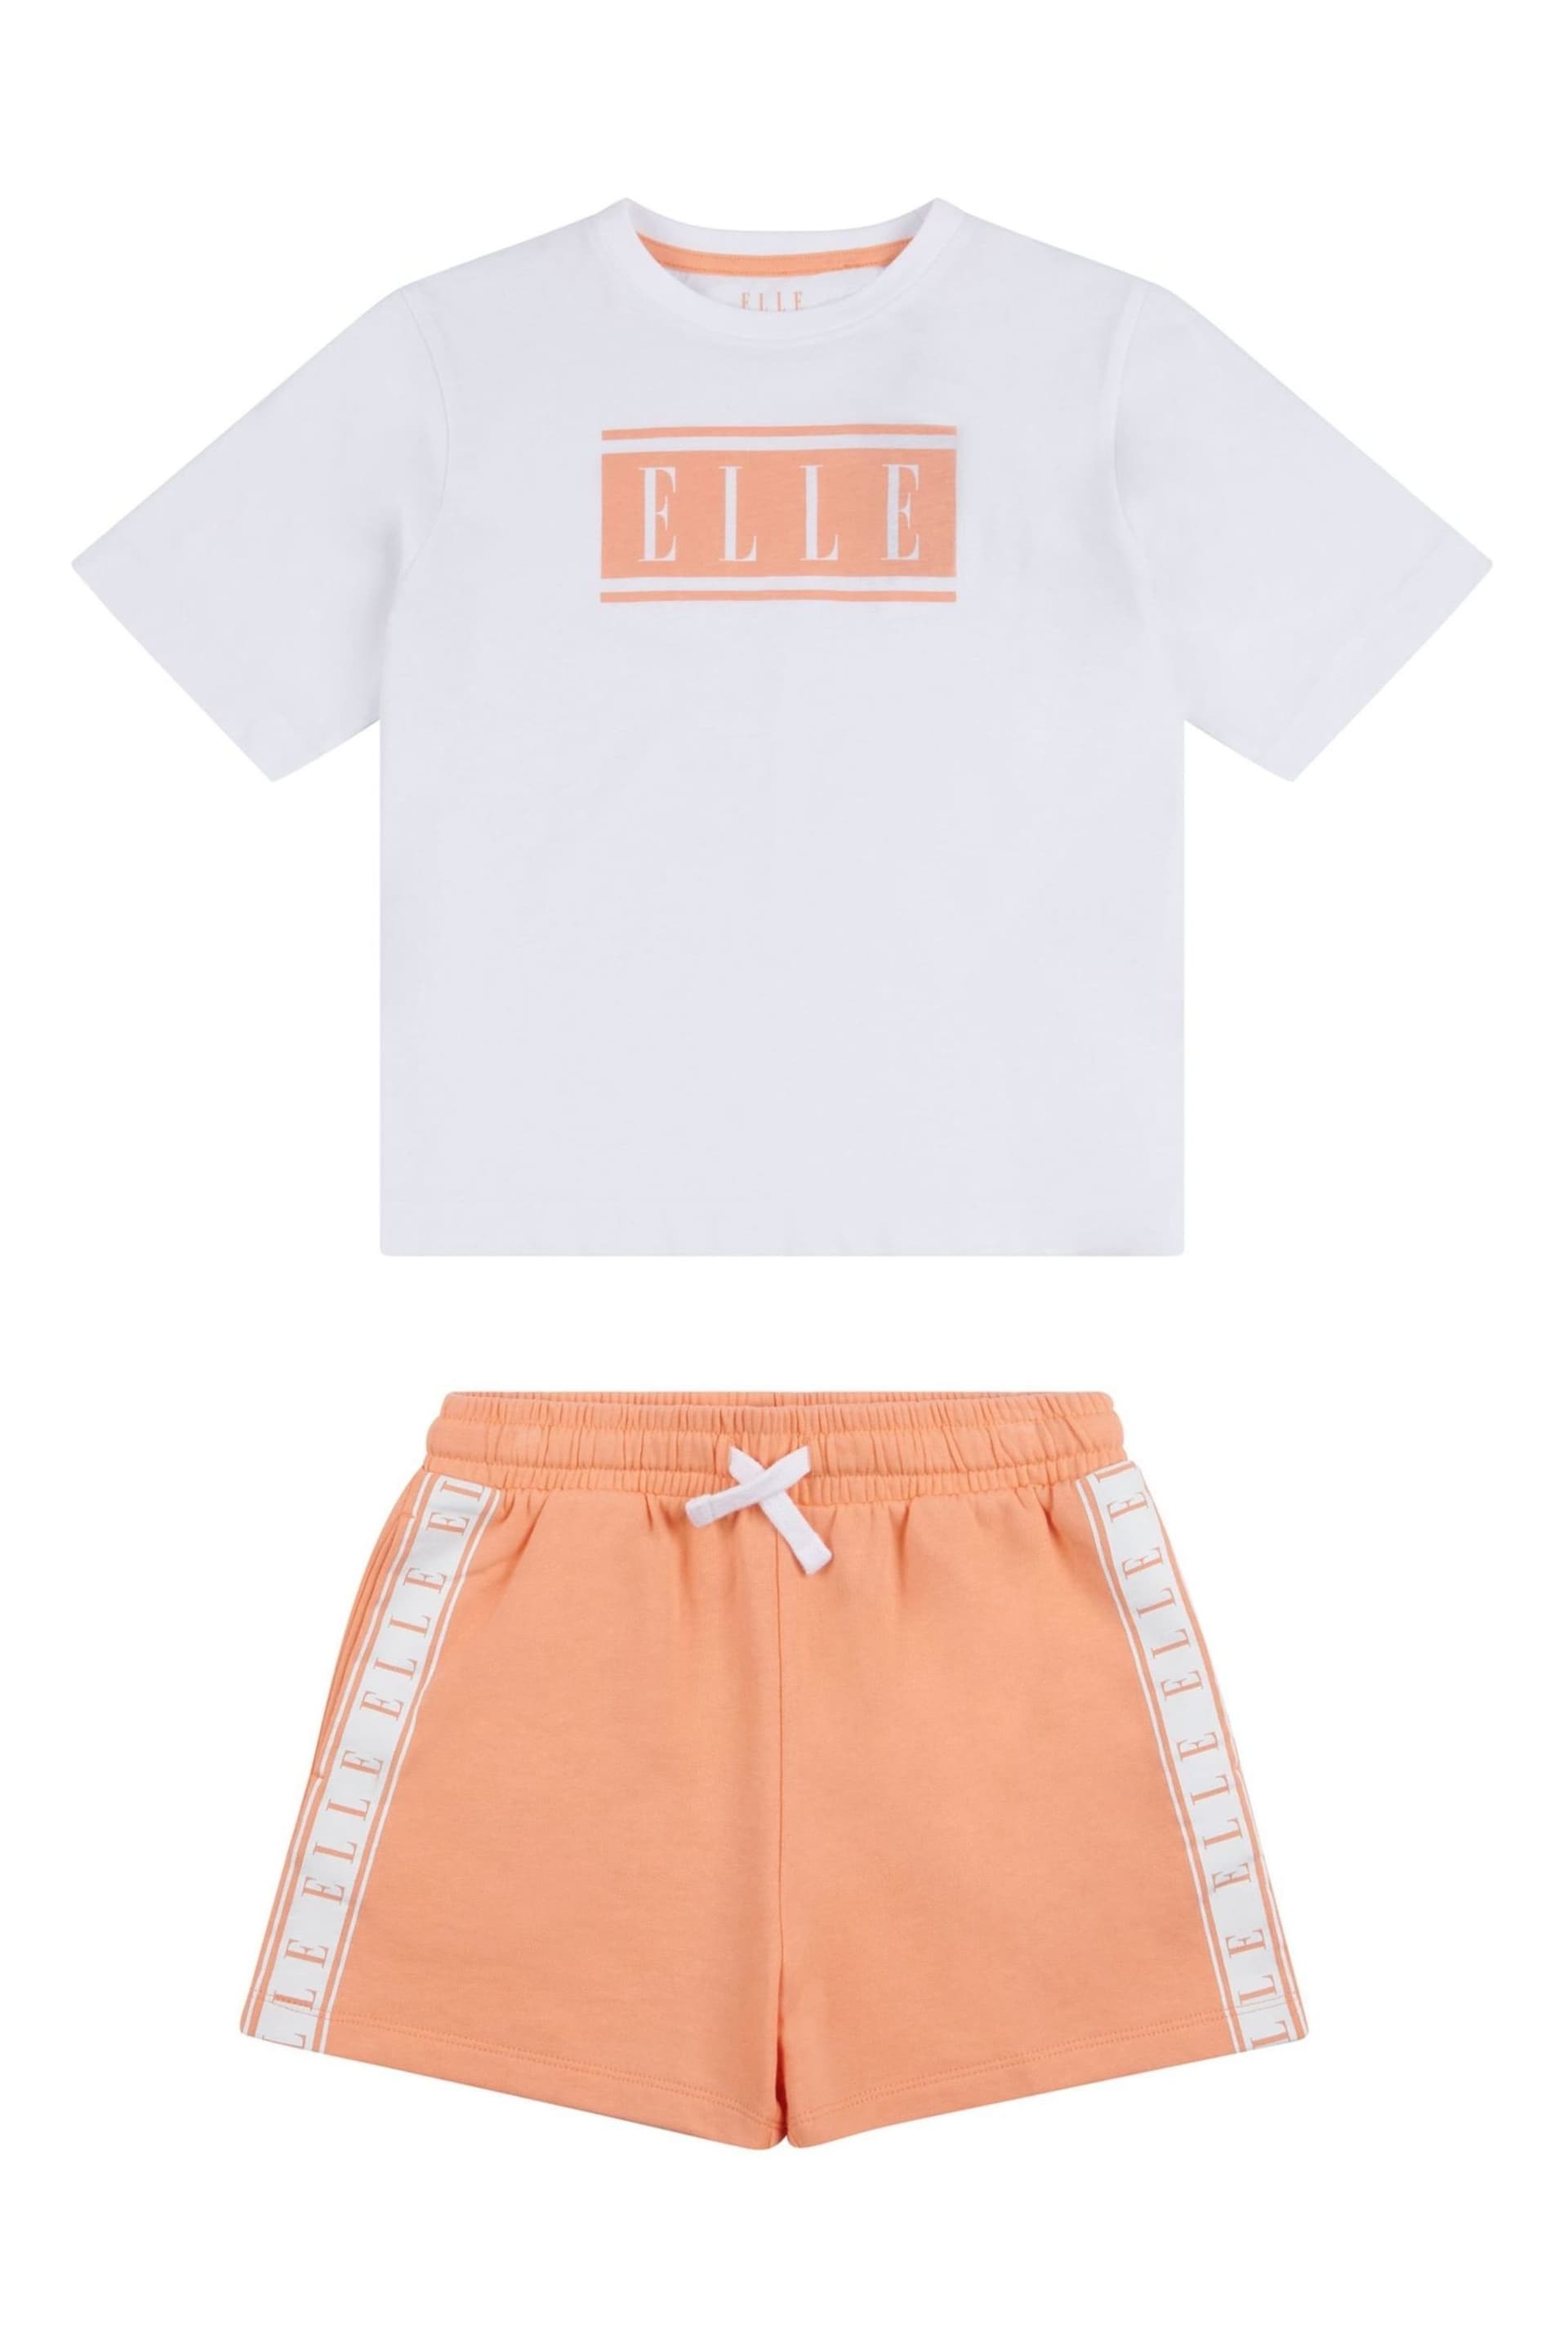 Elle Junior Girls White T-Shirt and Shorts Set - Image 1 of 3